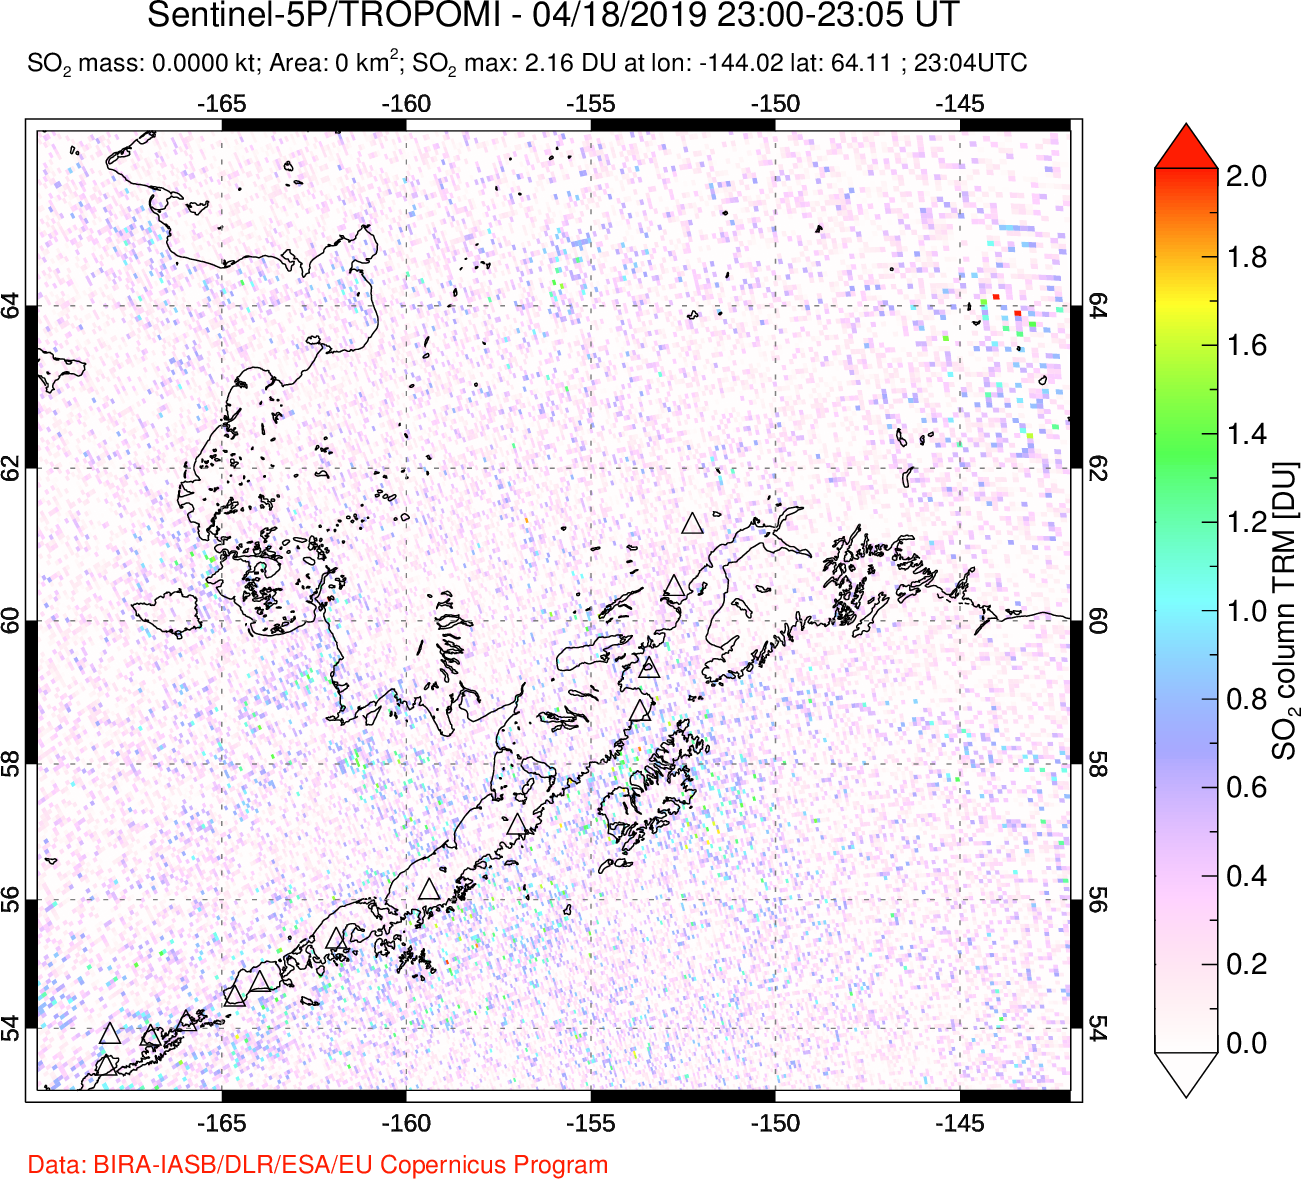 A sulfur dioxide image over Alaska, USA on Apr 18, 2019.